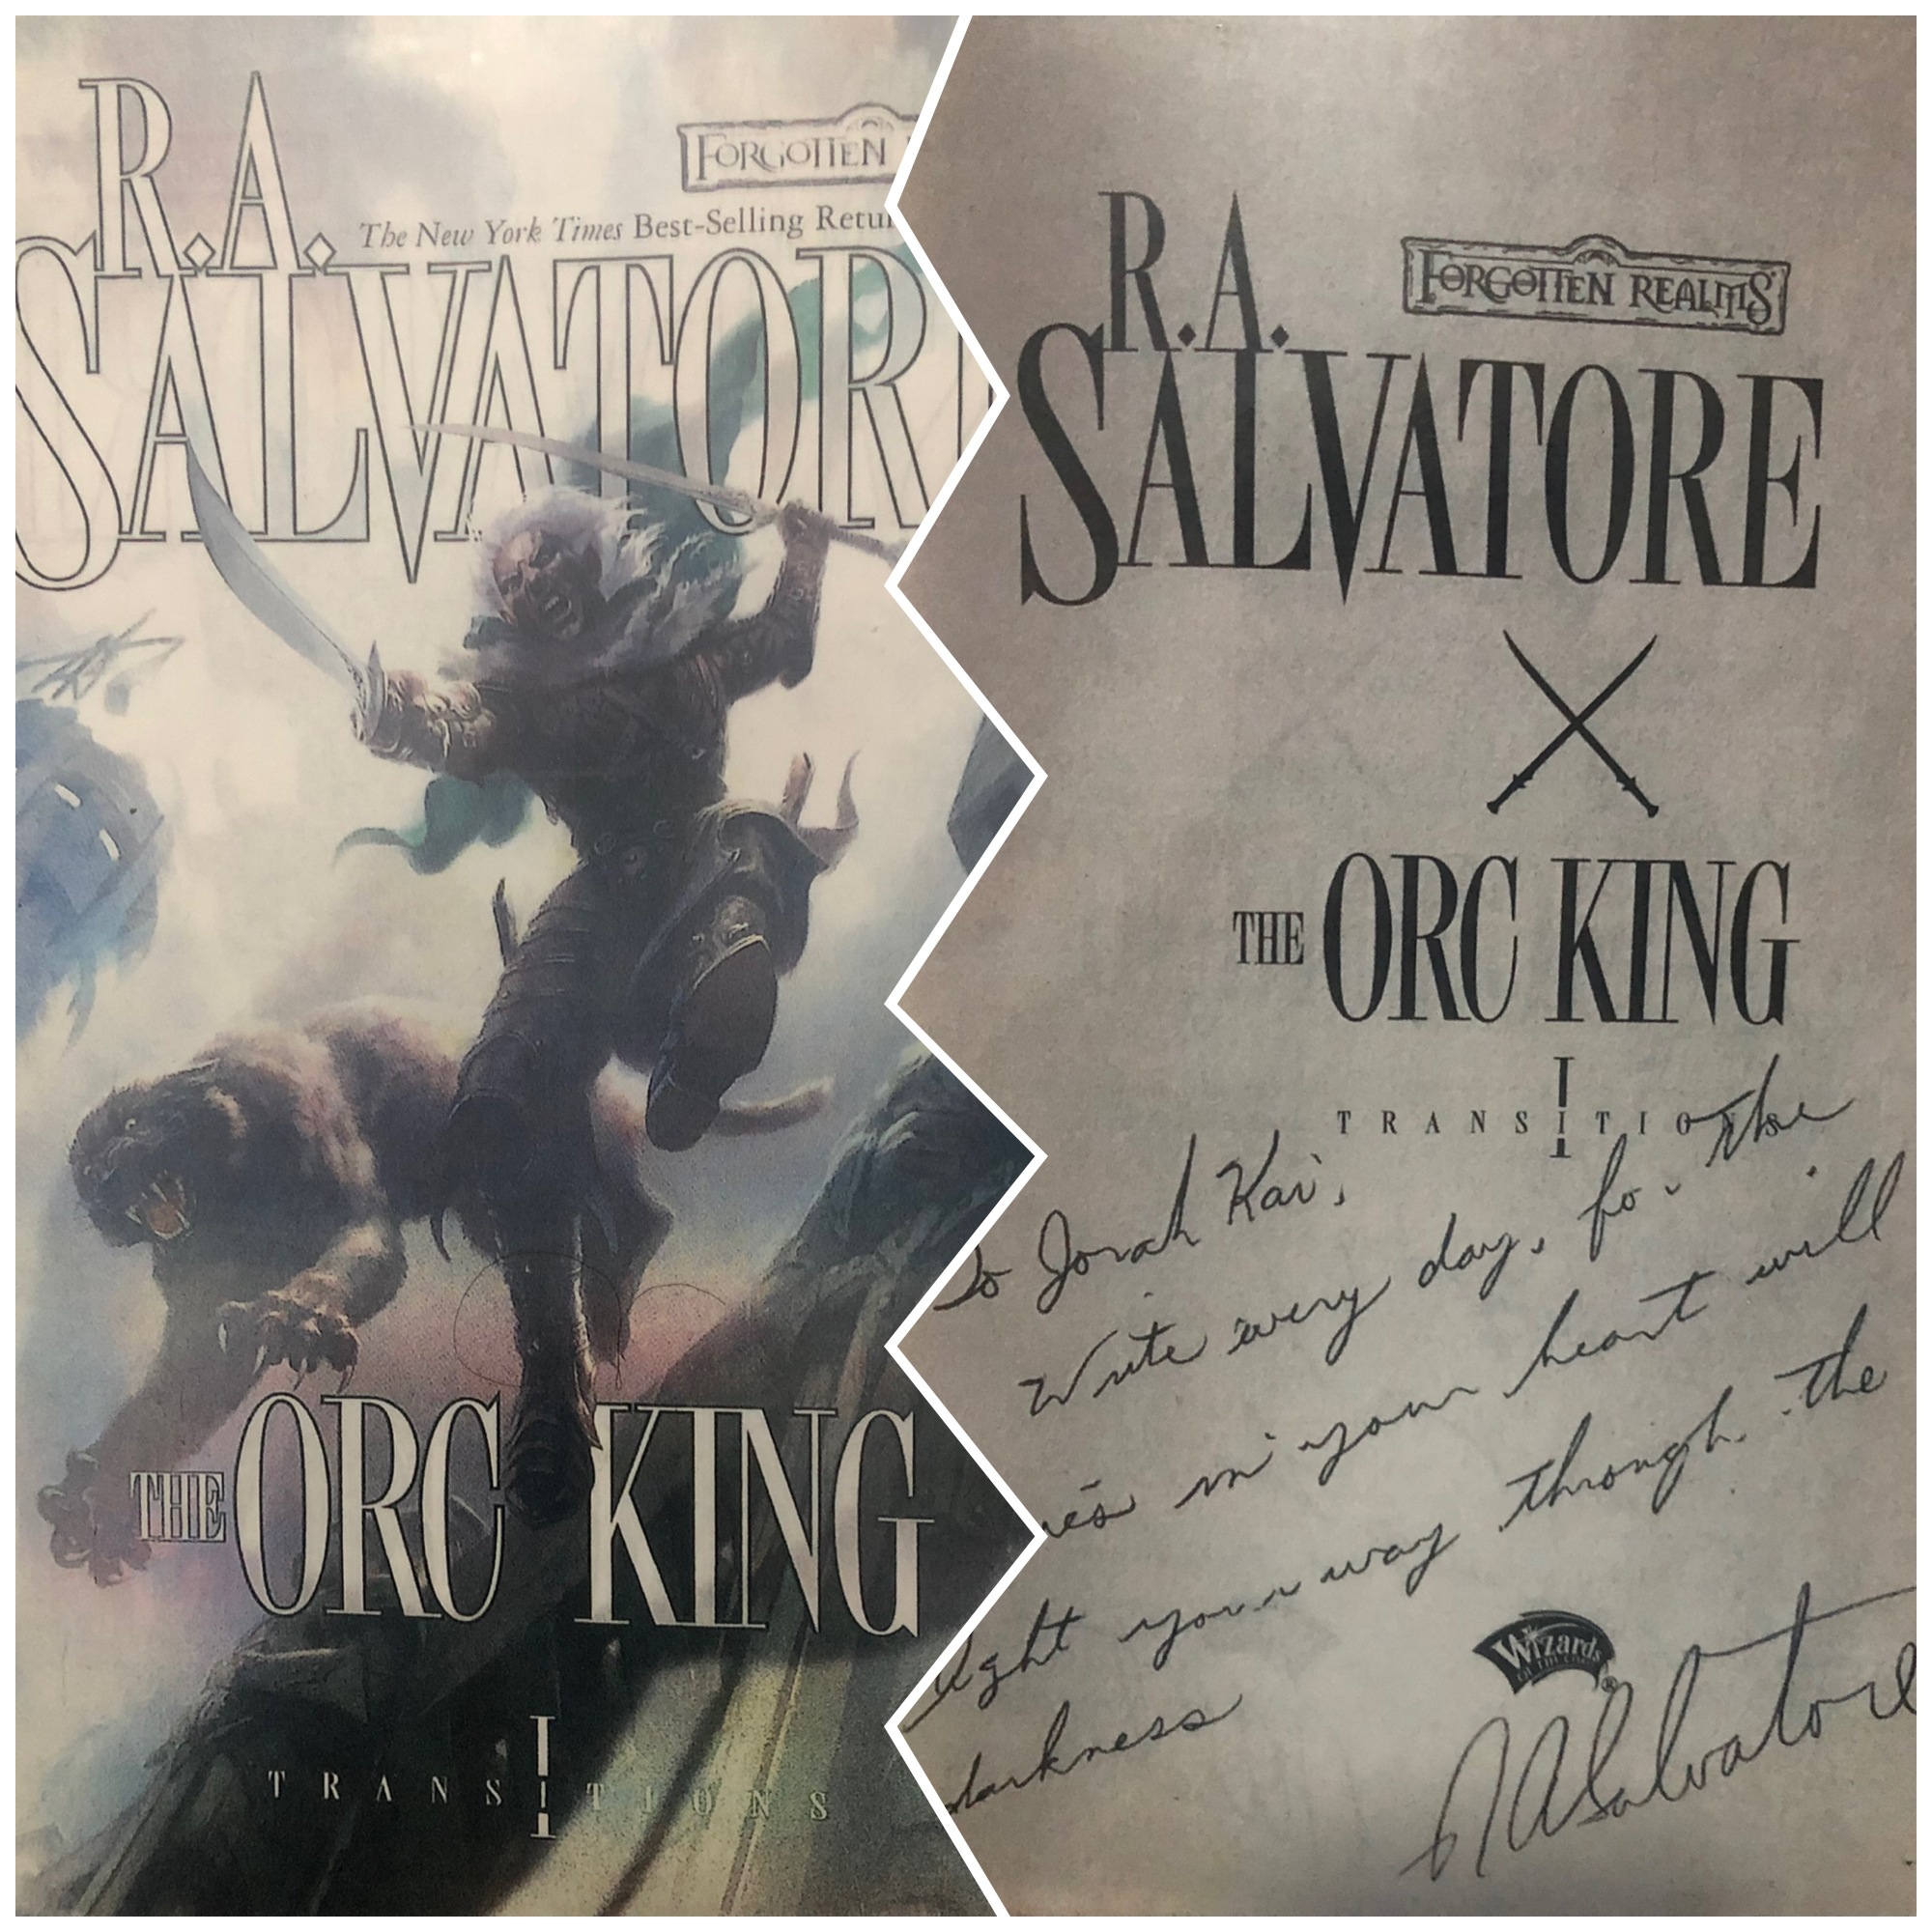 Celebrated magic fantasy author R.A. Salvatore wishes Kai to "Write Every Day."